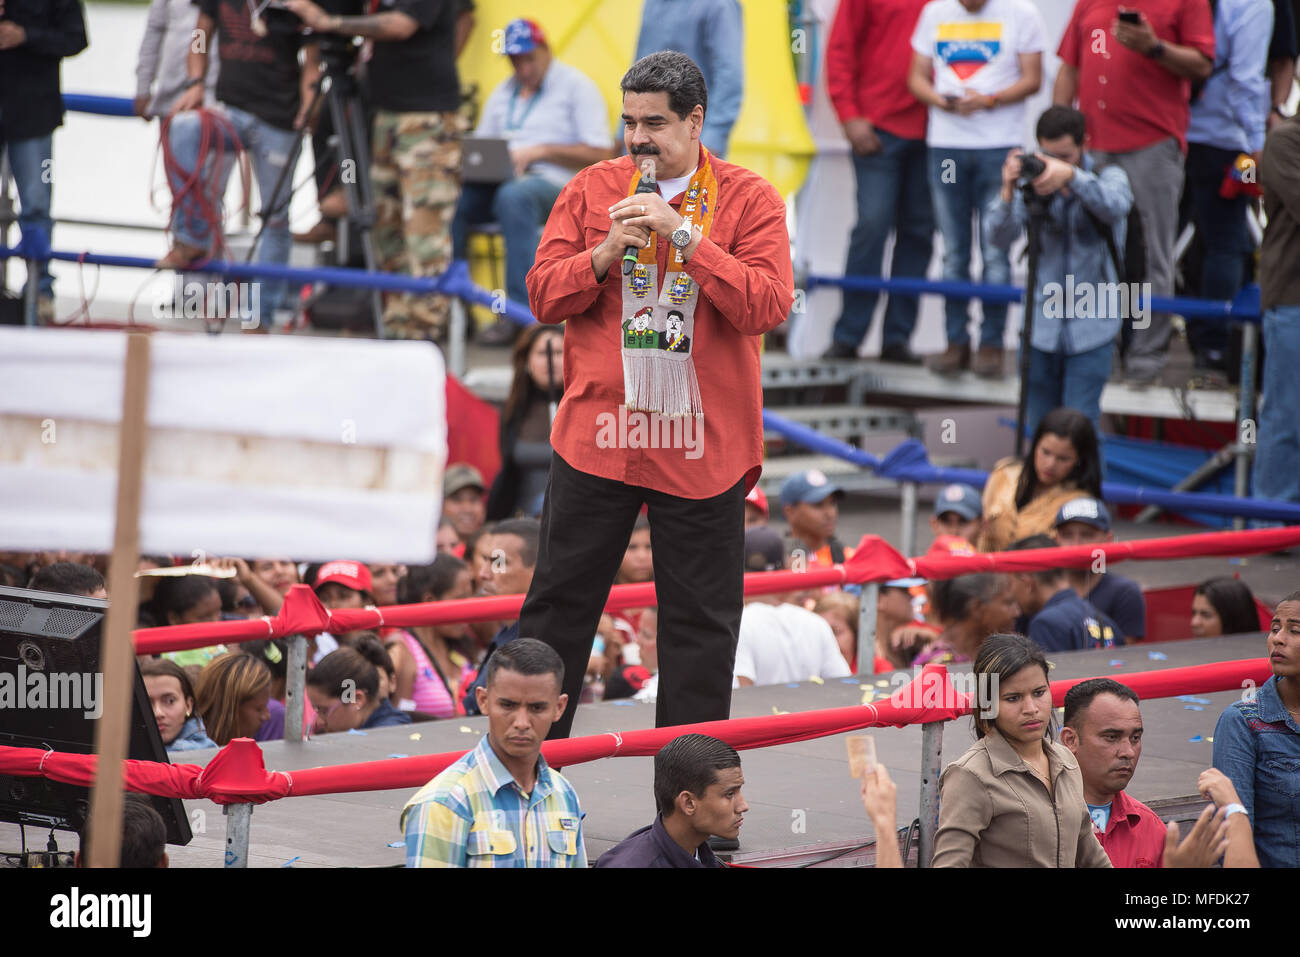 Tucupita. Venezuela. 24th April 2018. The president of Venezuela, Nicolás Maduro, participates in a campaign in Tucupita, the capital of the state of Delta Amacuro (east). Marcos Salgado / Alamy News Stock Photo